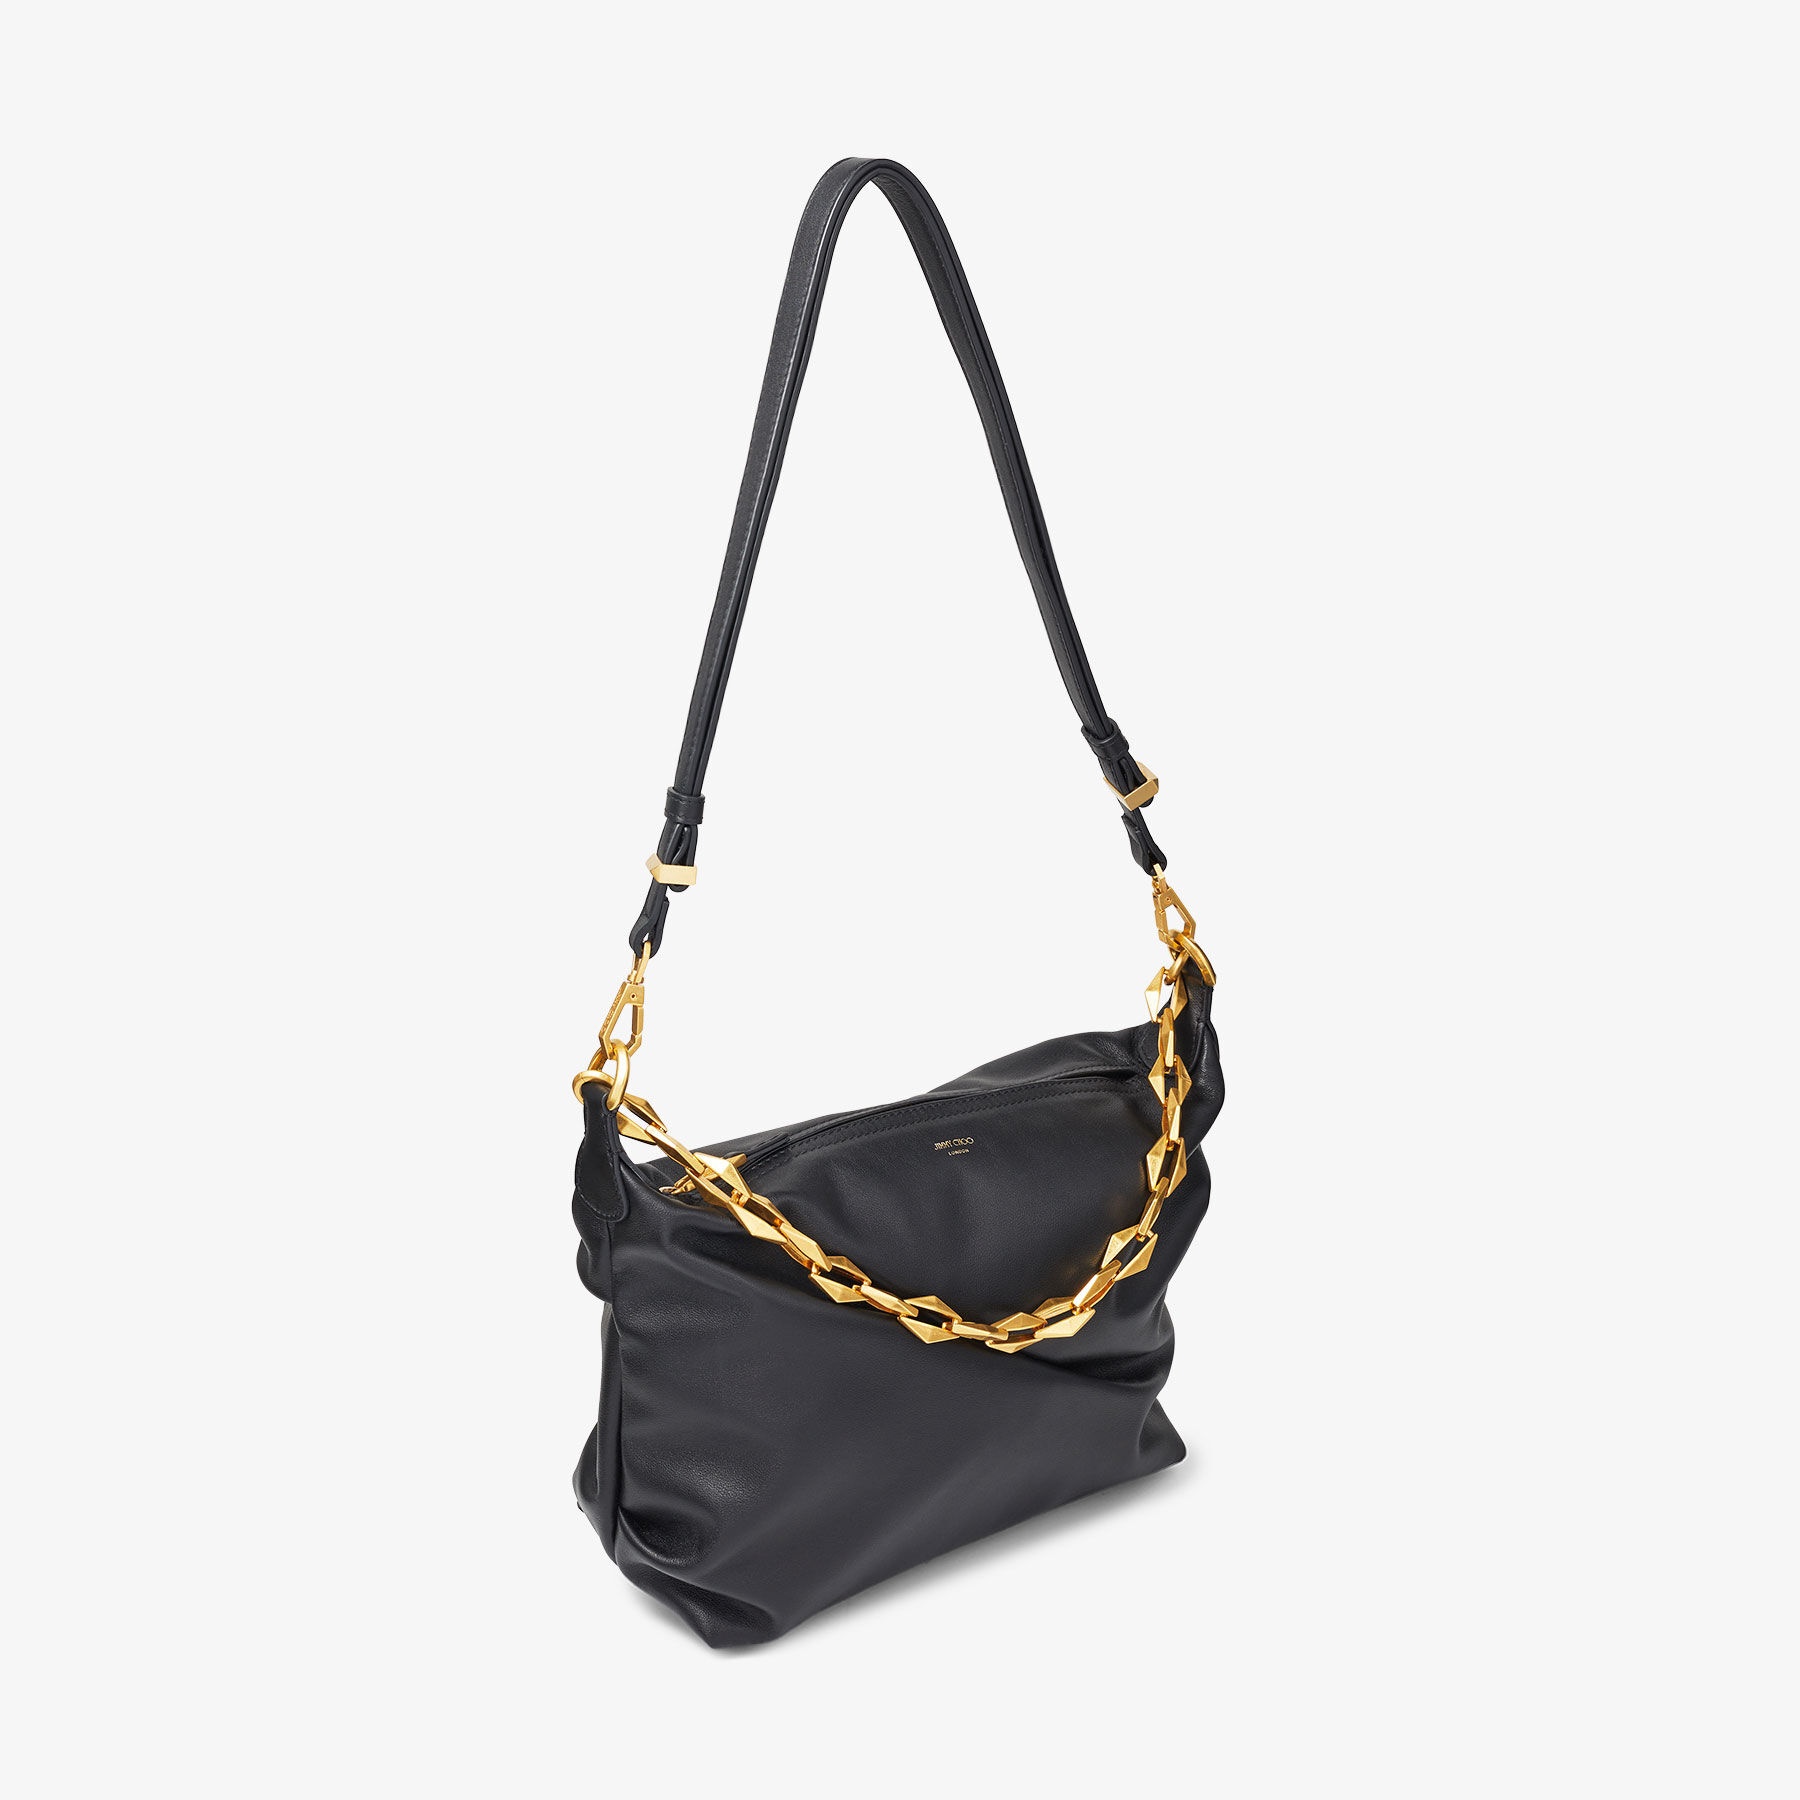 Diamond Soft Hobo S
Black Soft Calf Leather Hobo Bag with Chain Strap - 3